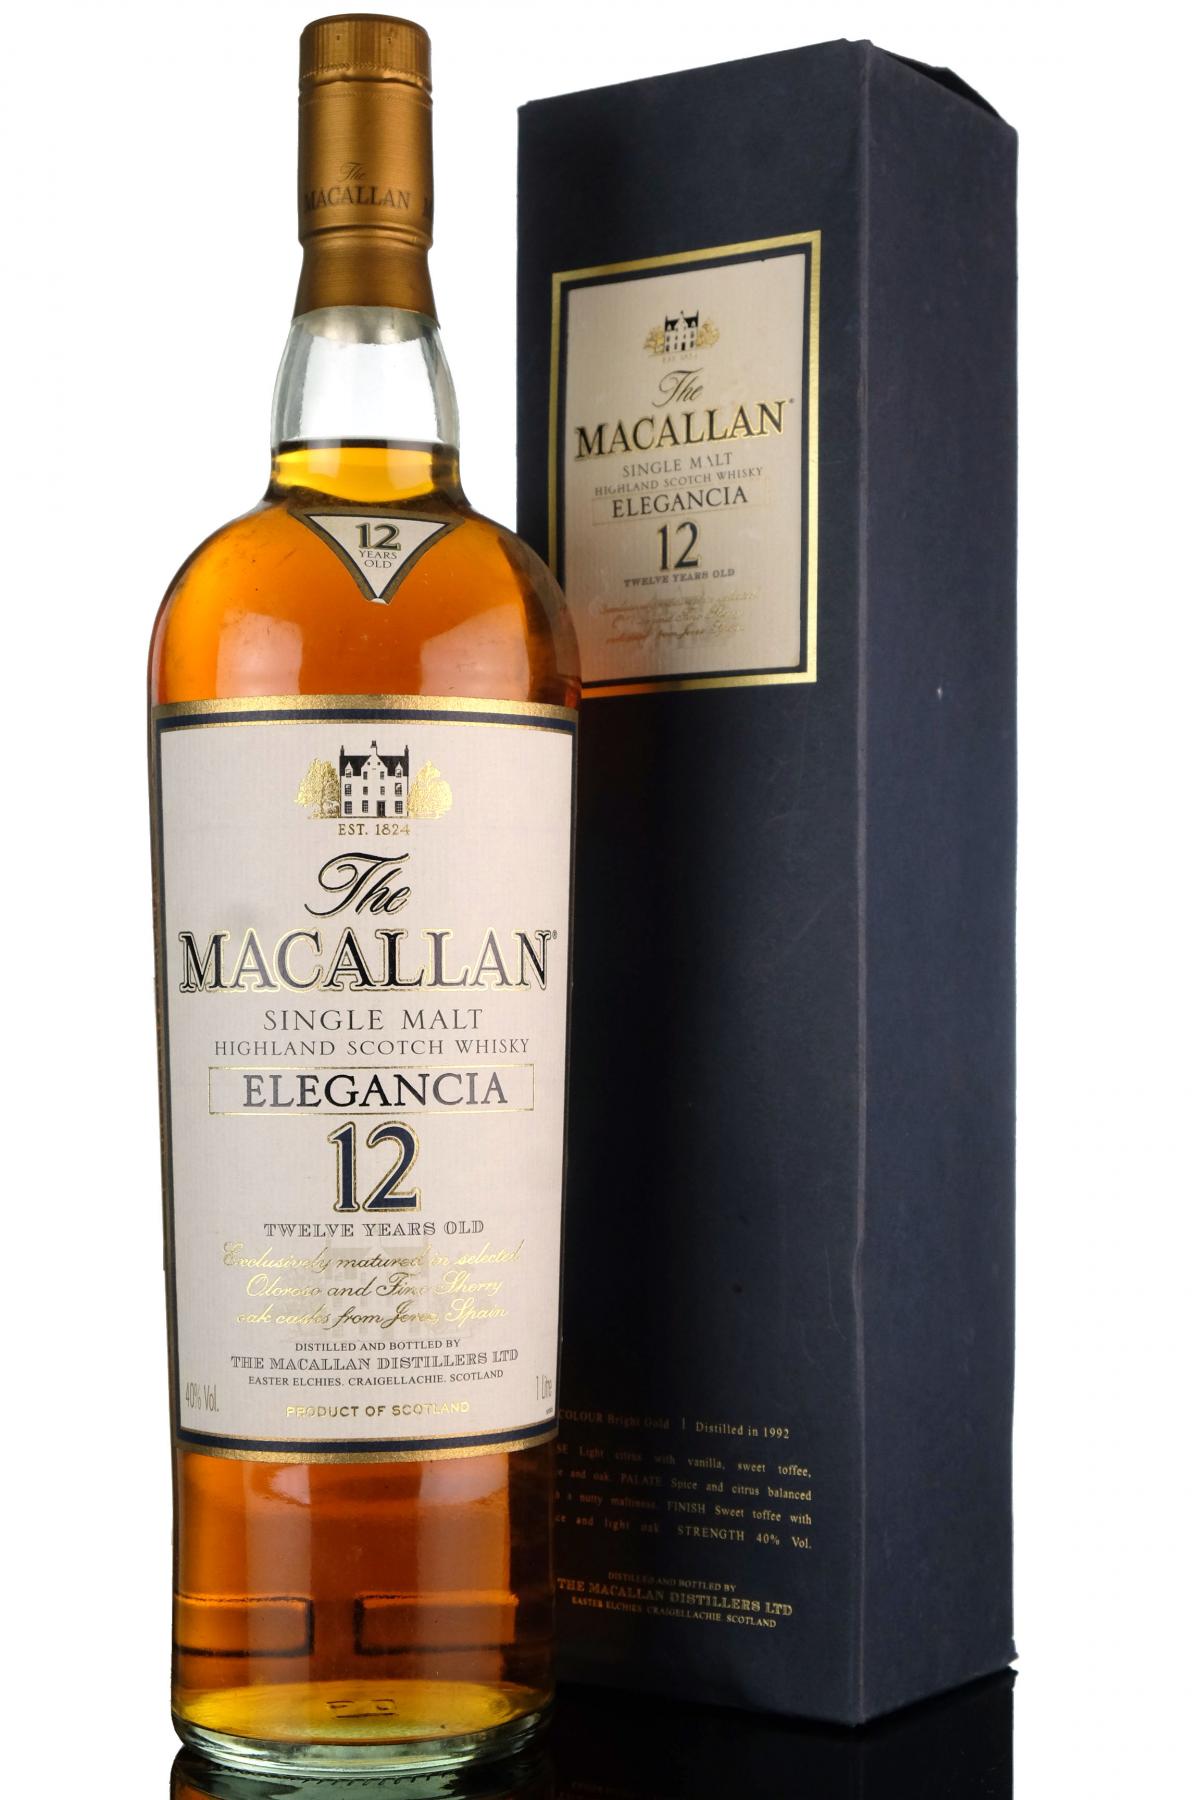 Macallan Elegancia - 12 Year Old - 1 Litre